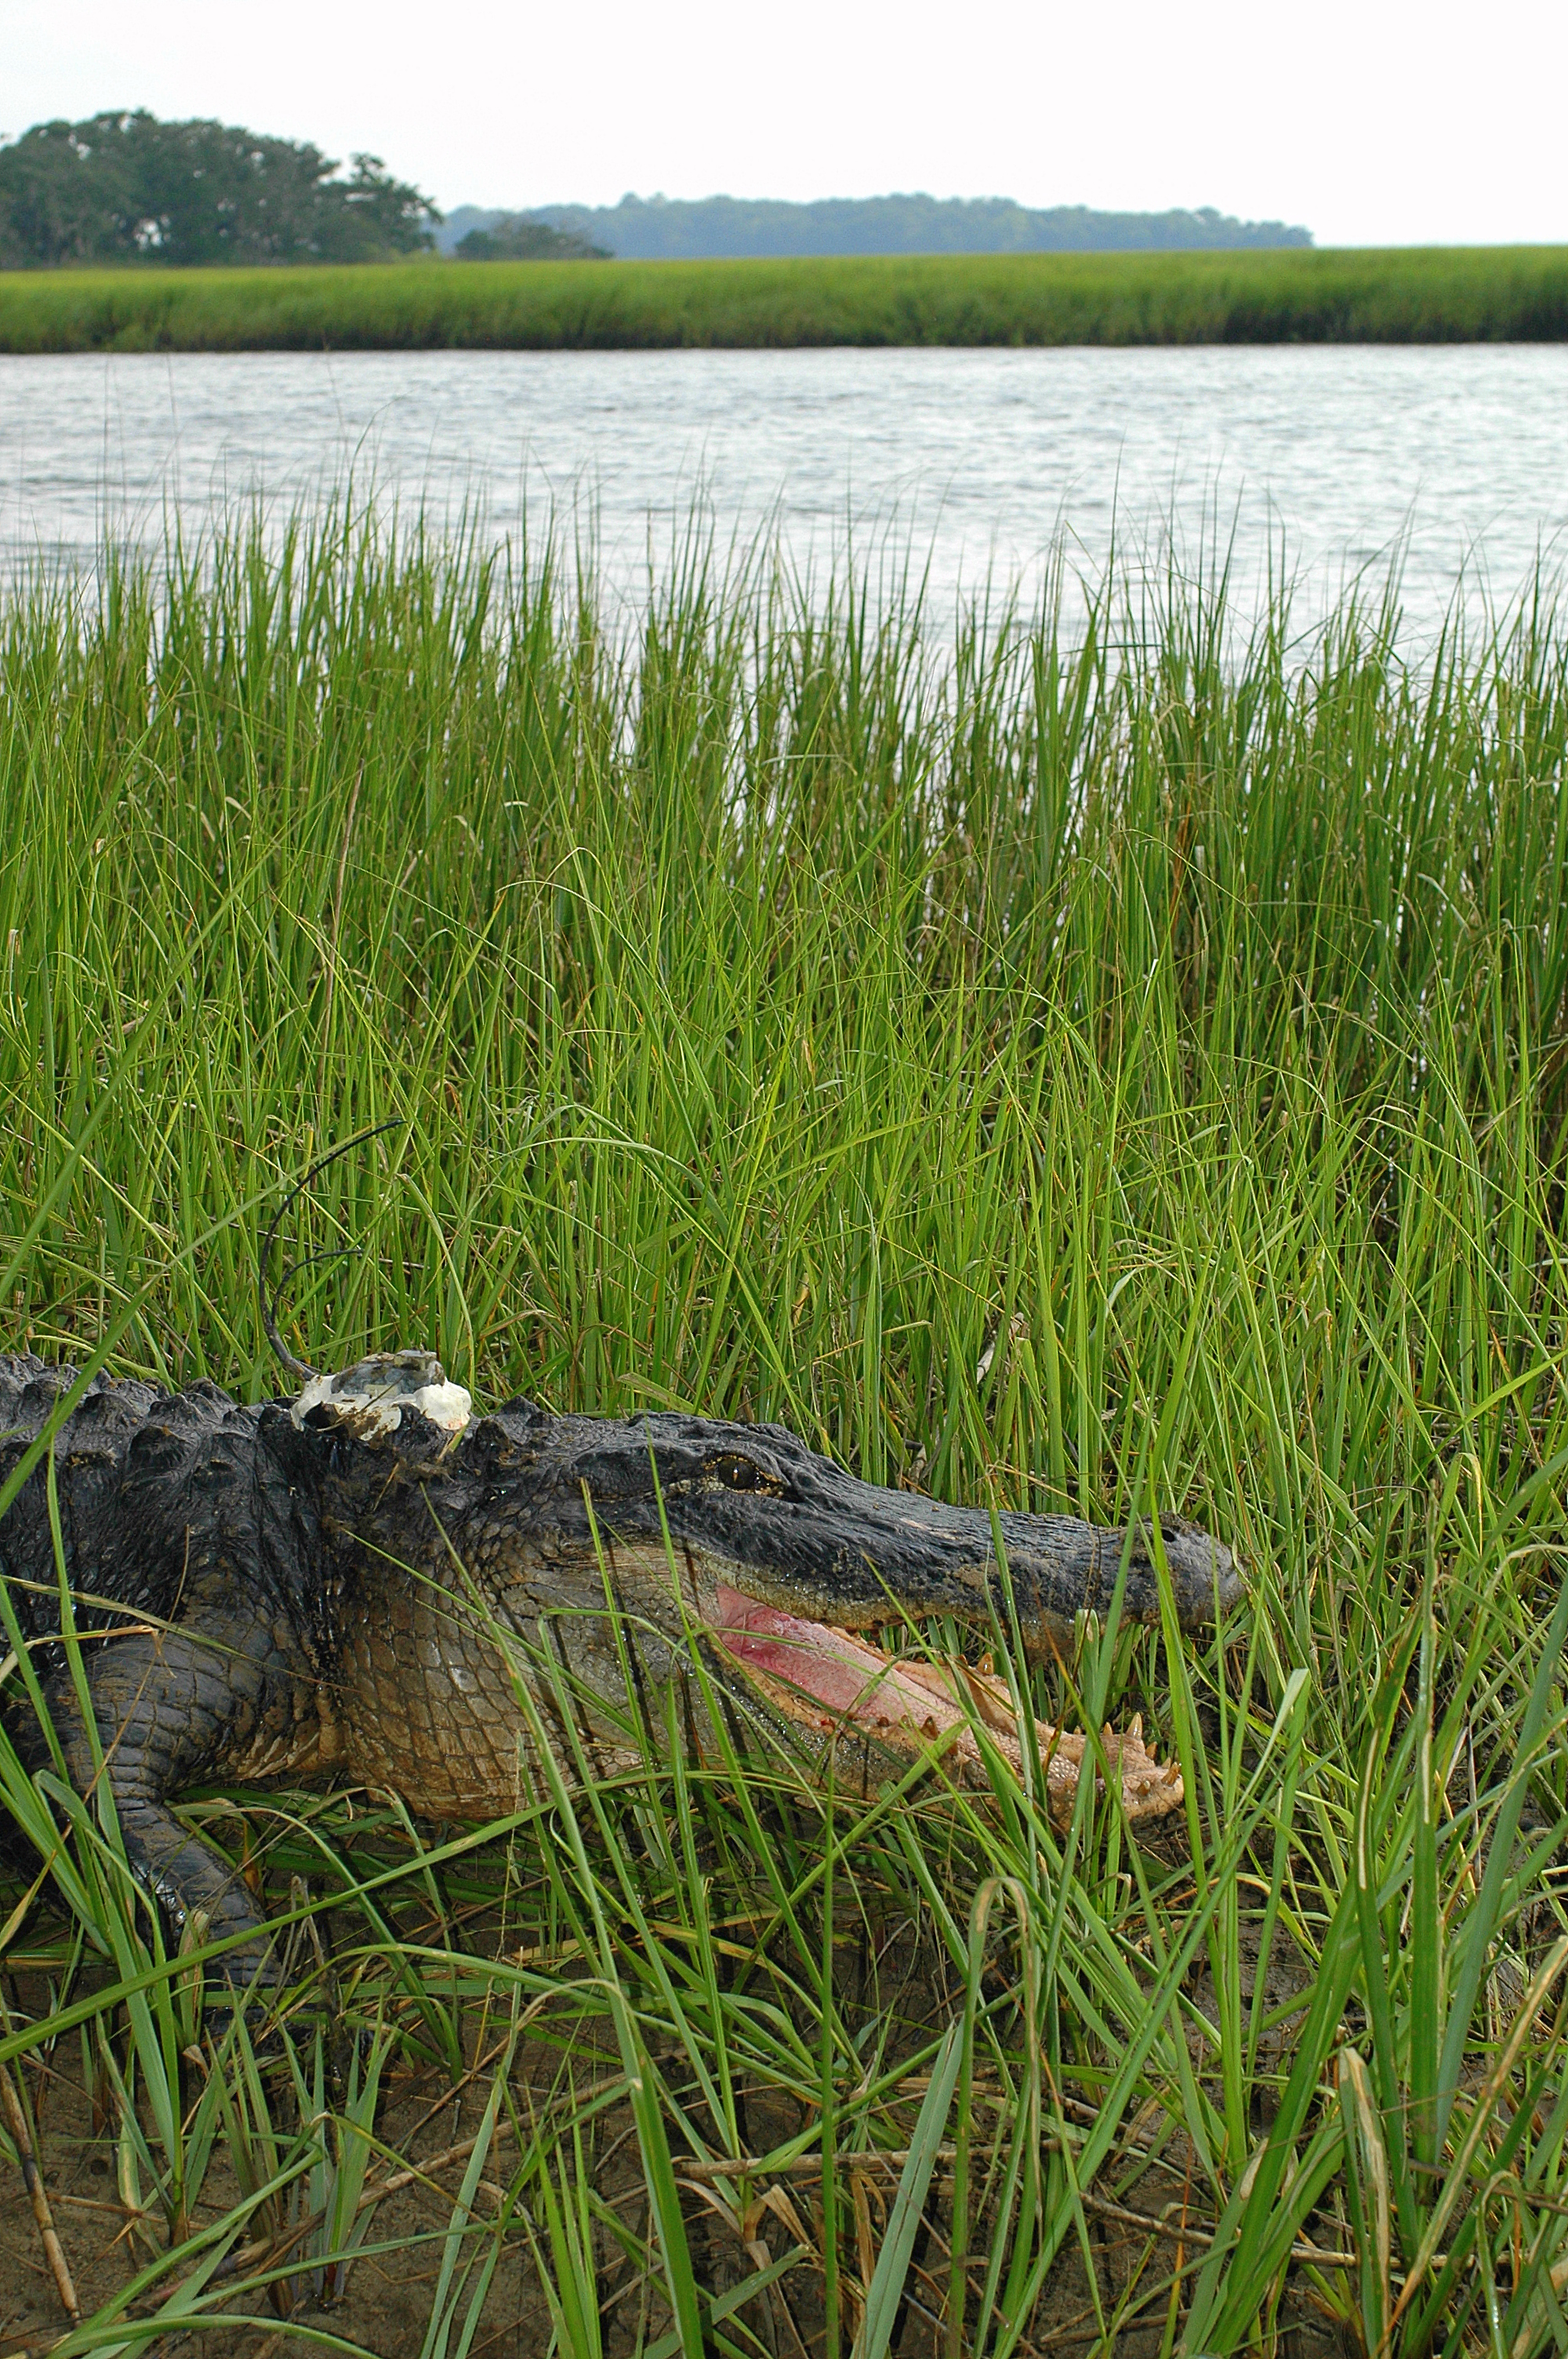 alligator embedded